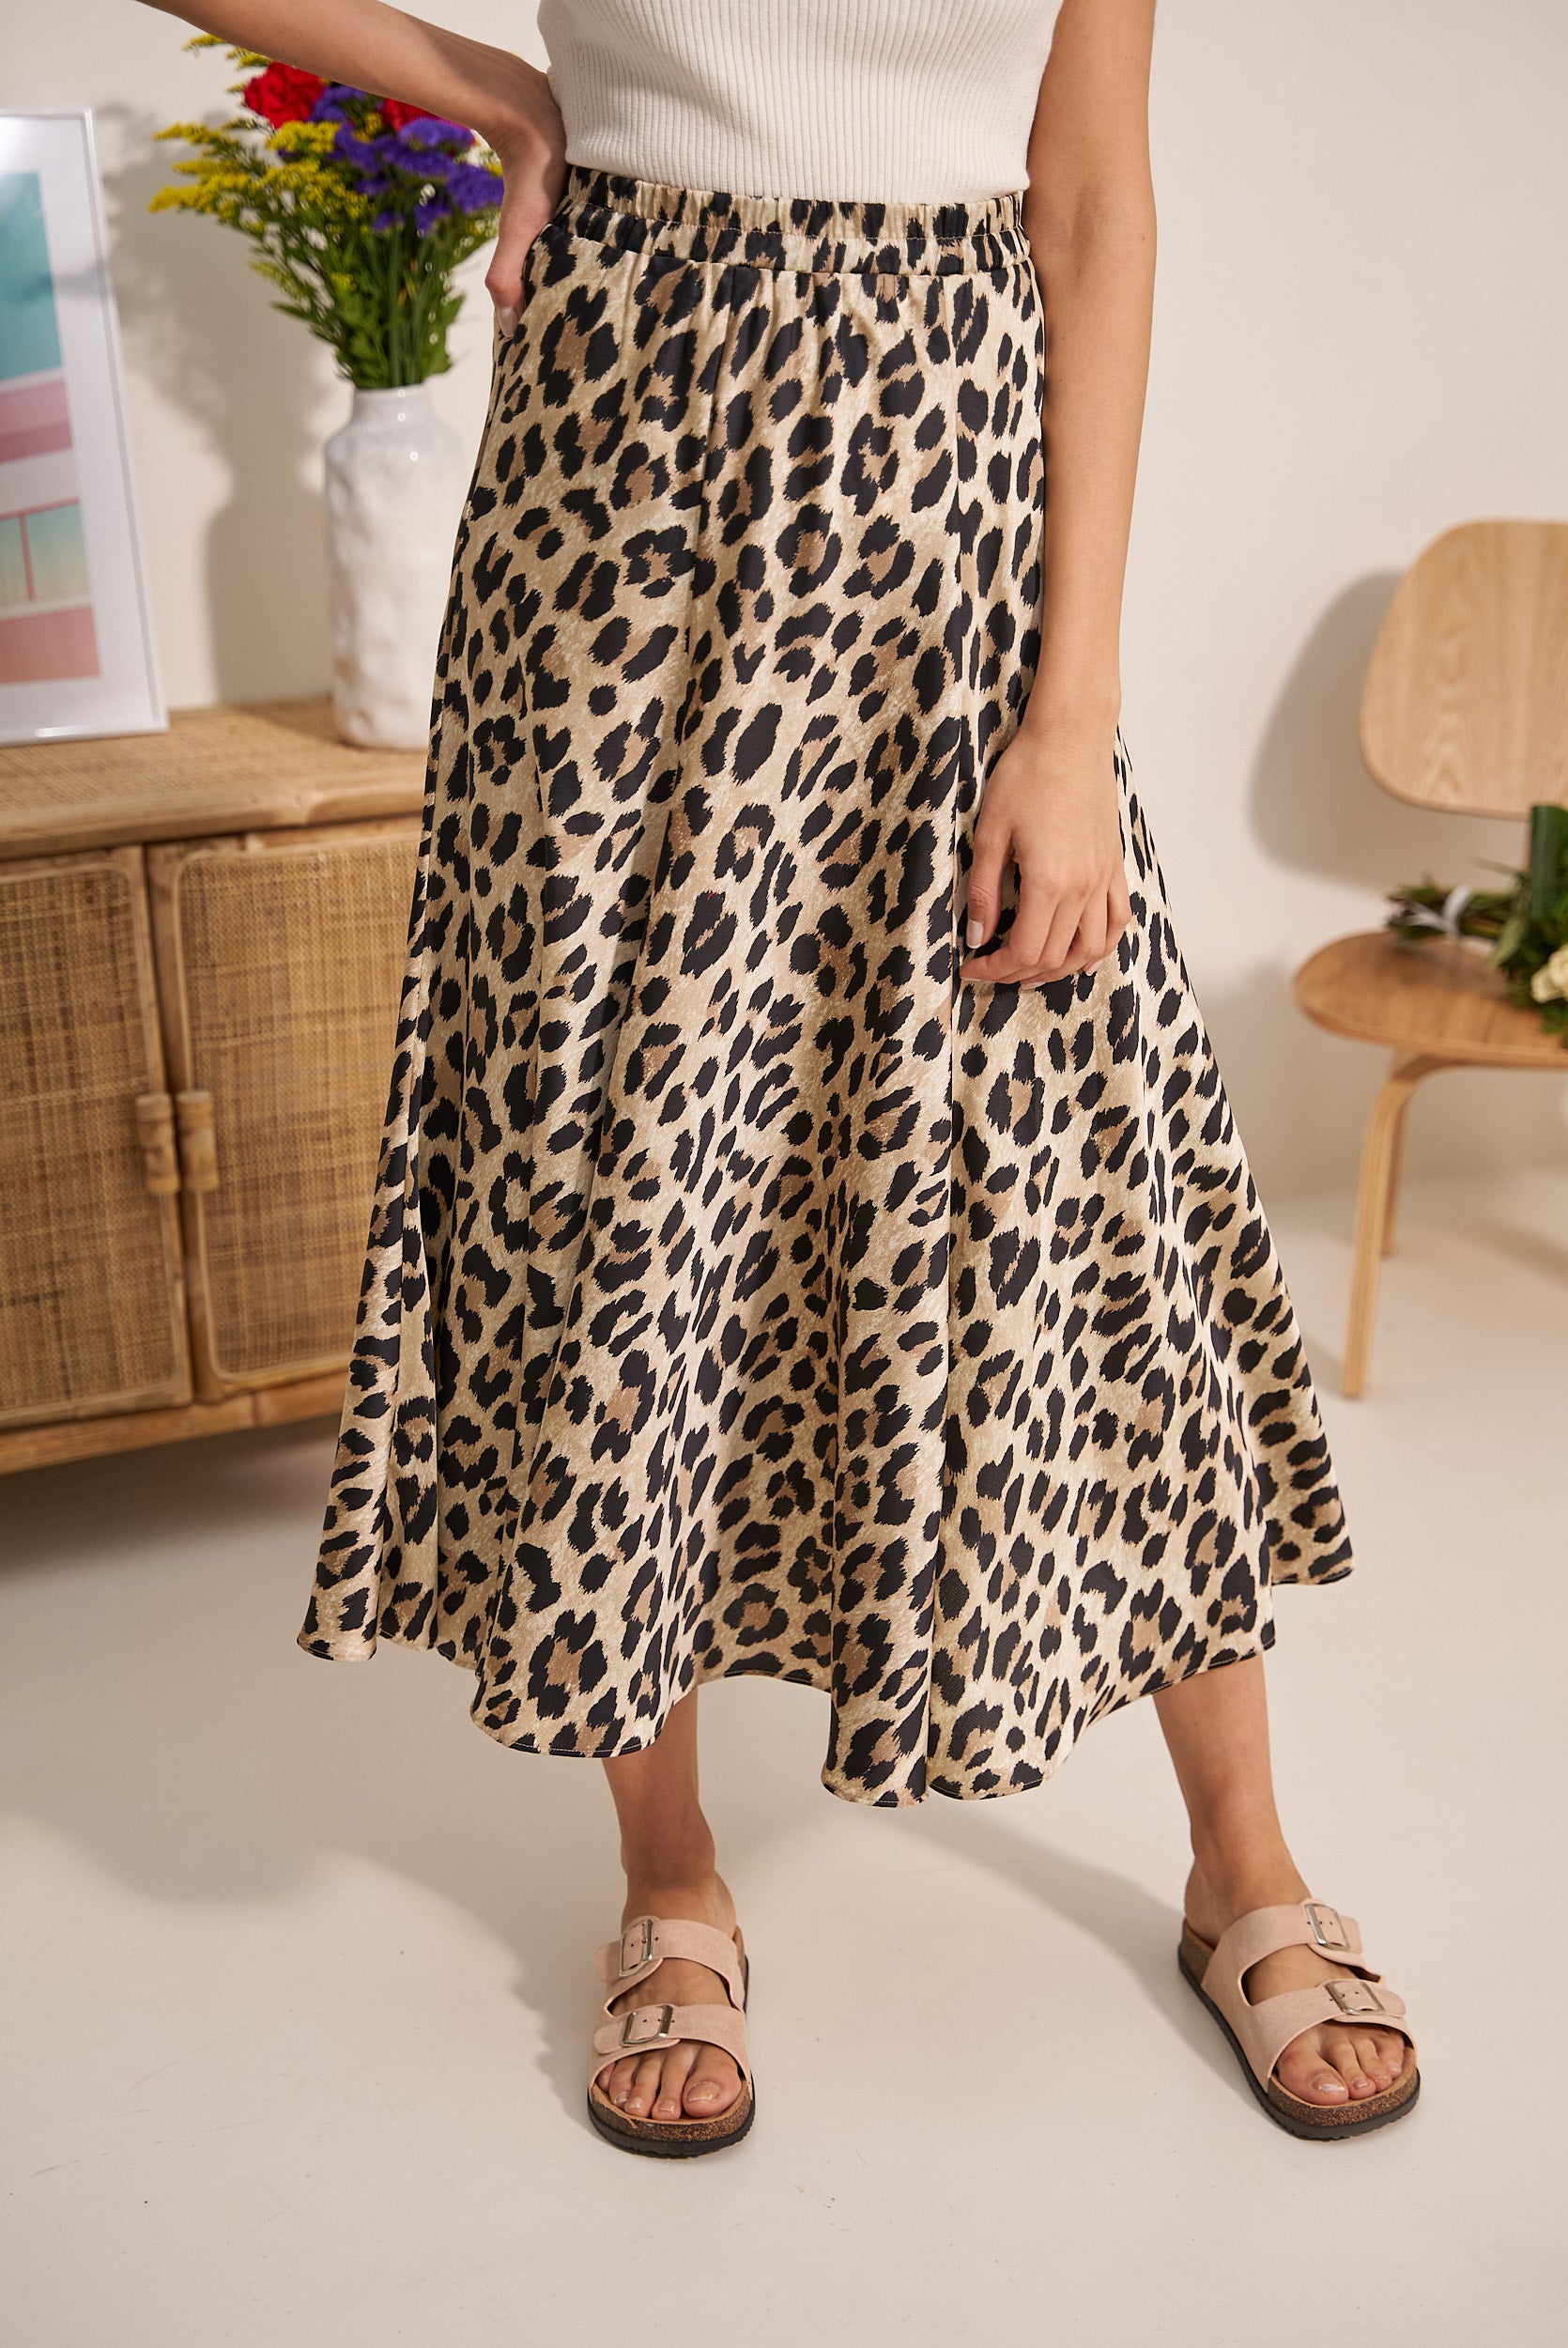 Satin skirt in leopard print